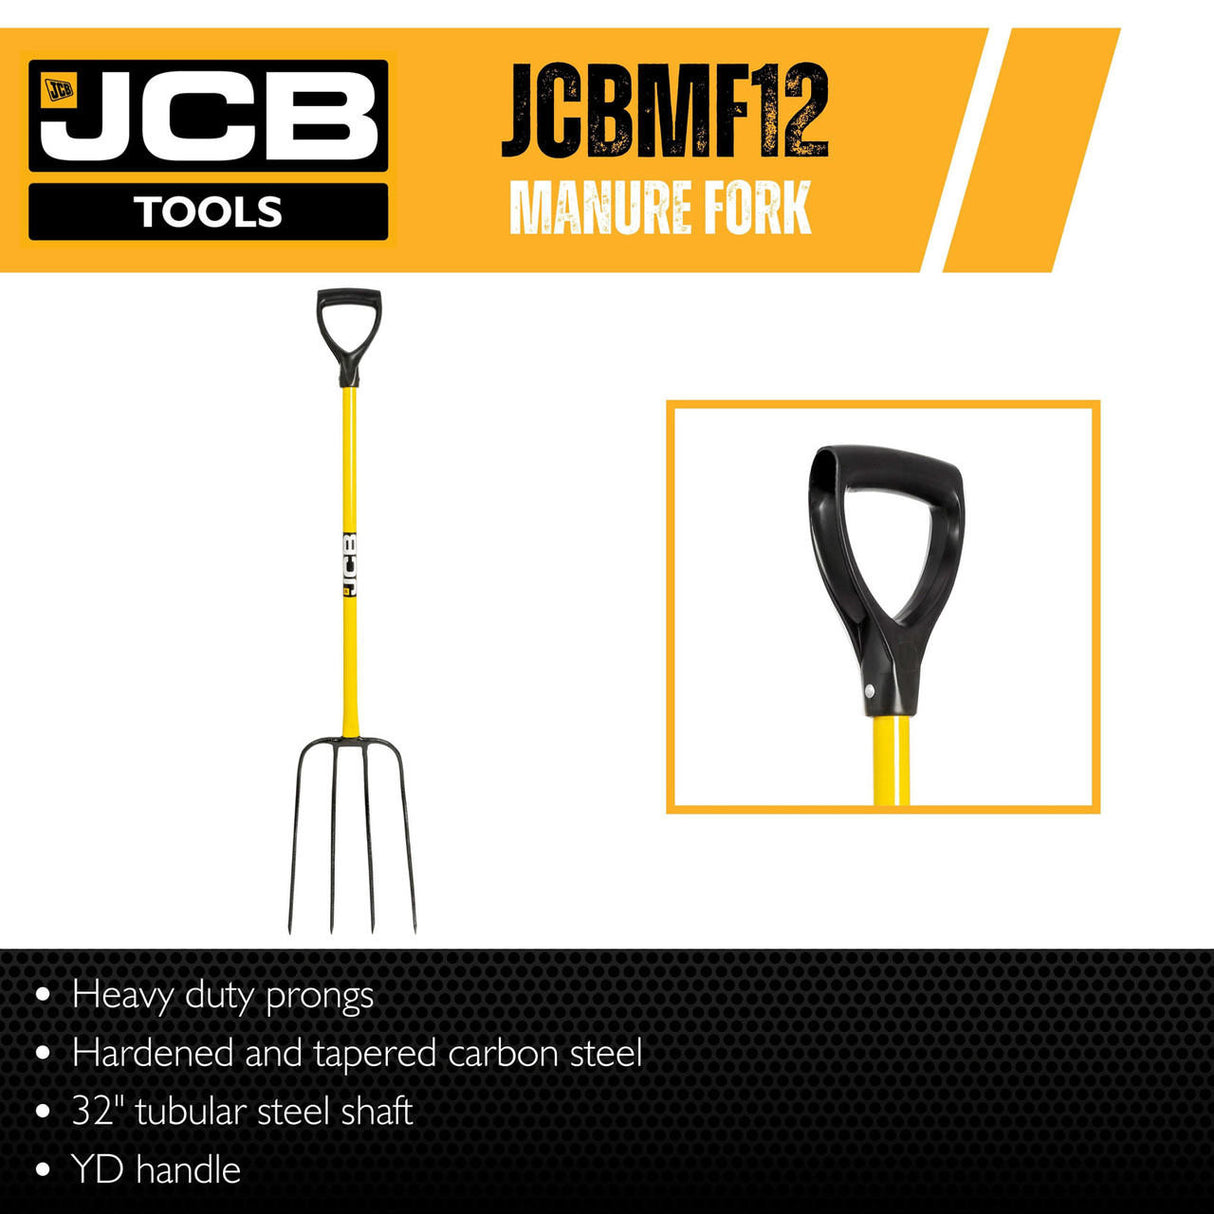 jcb tools JCB Professional Manure Fork 4 Prong D Handle | JCBMF12